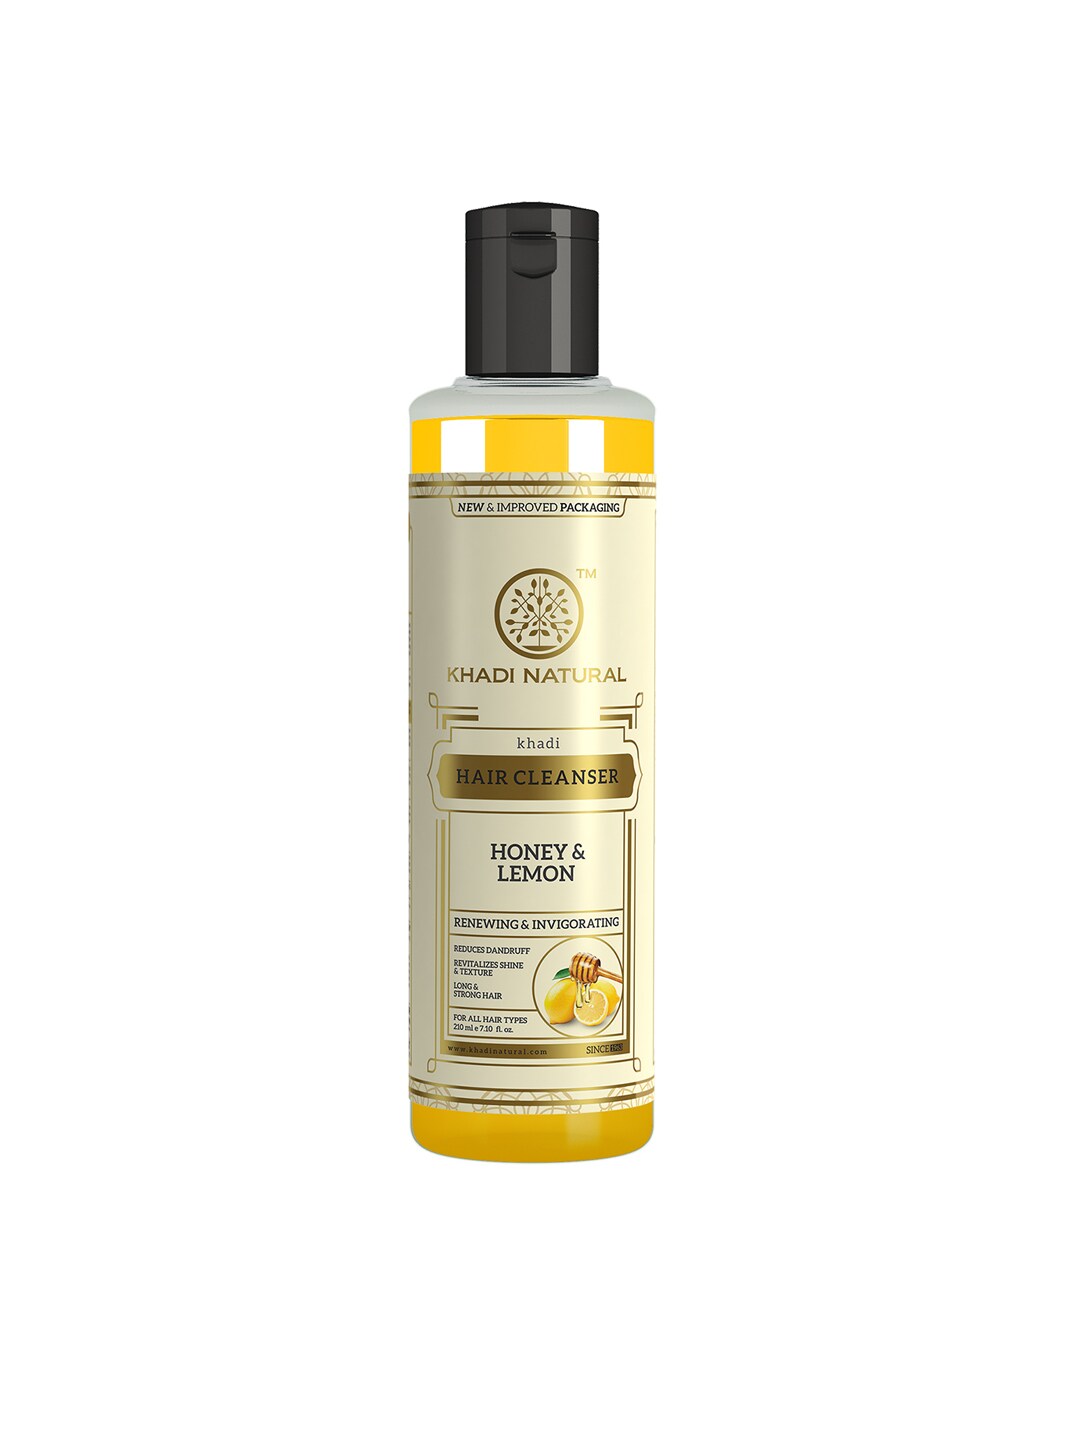 Khadi Natural Unisex Honey & Lemon Hair Cleanser 210 ml Price in India